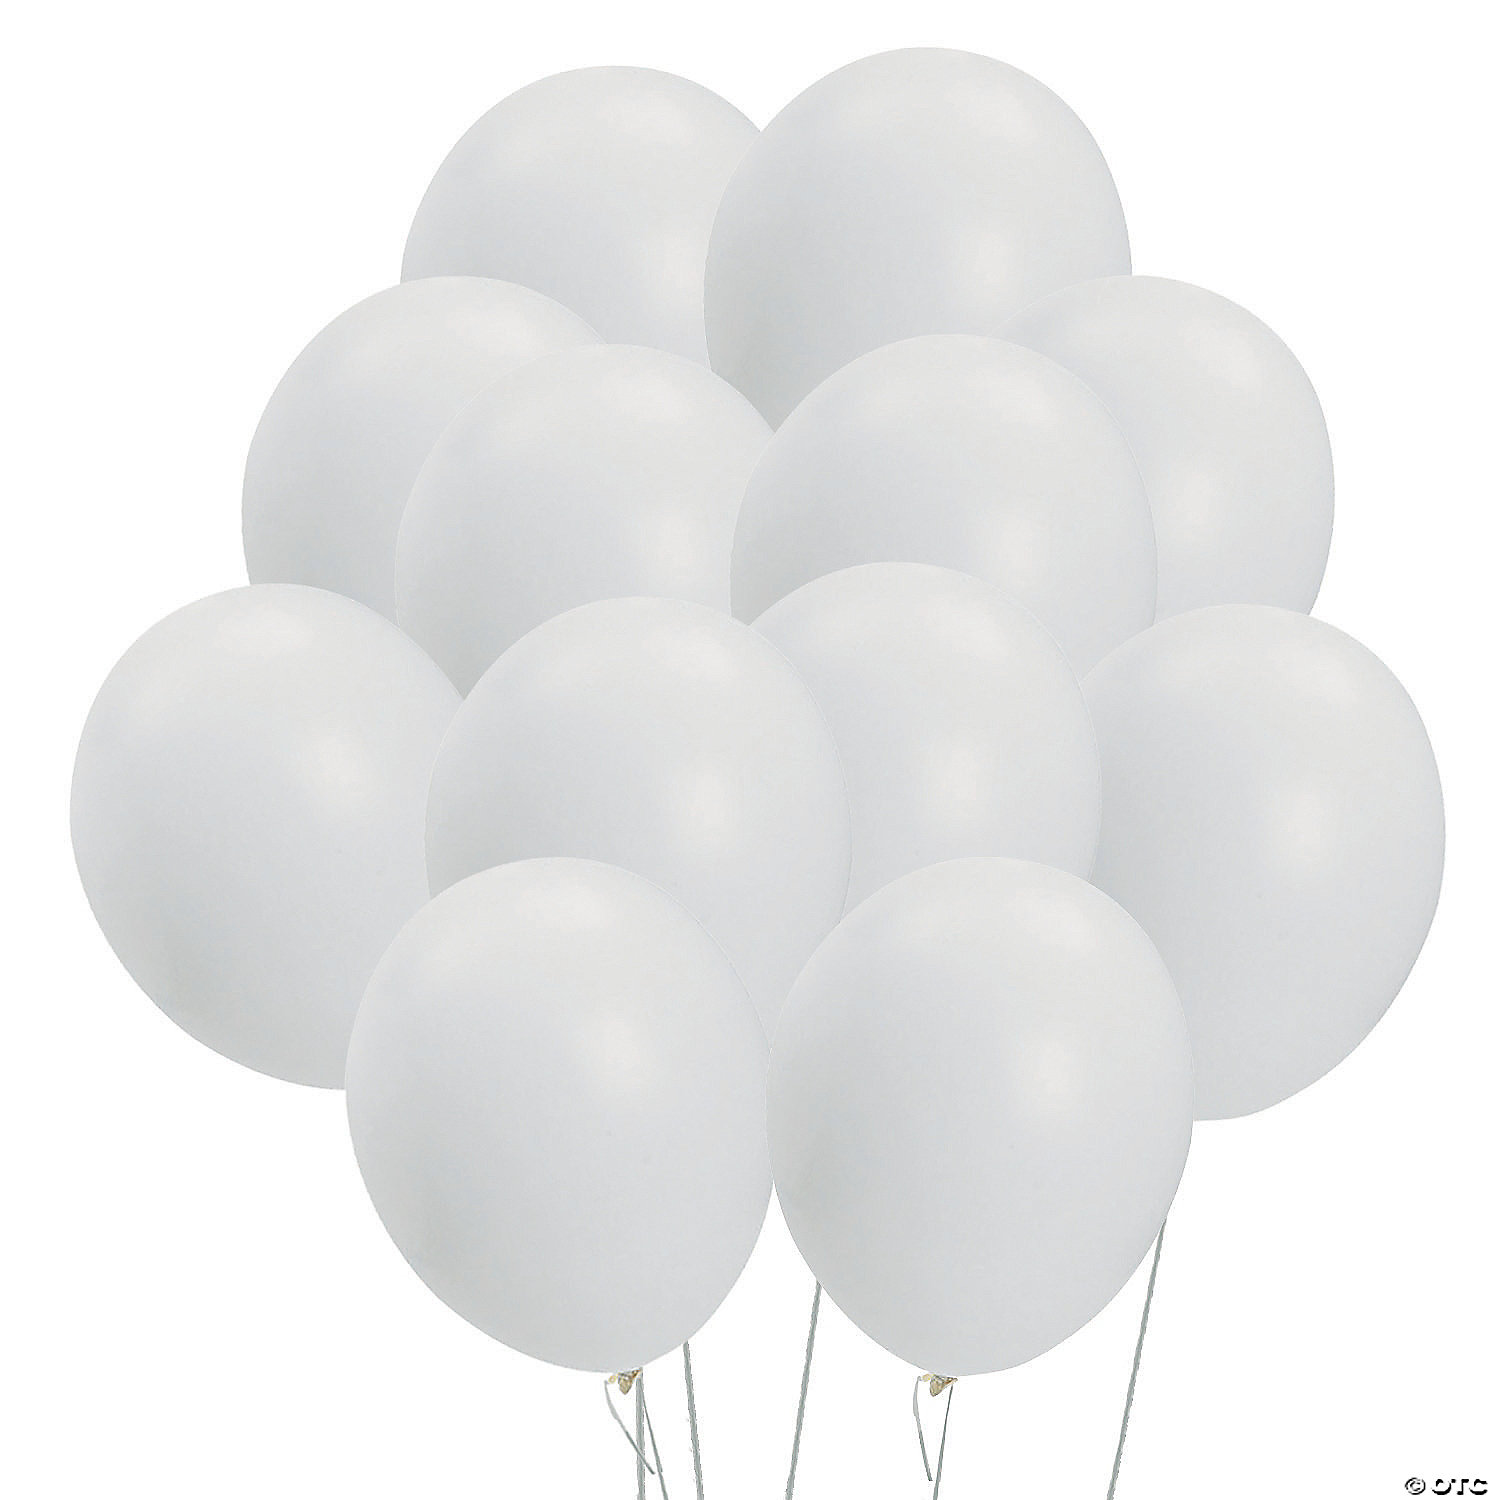 25 pcs White x 12" Metallic Latex Balloons Wedding Party Decorations Supplies 